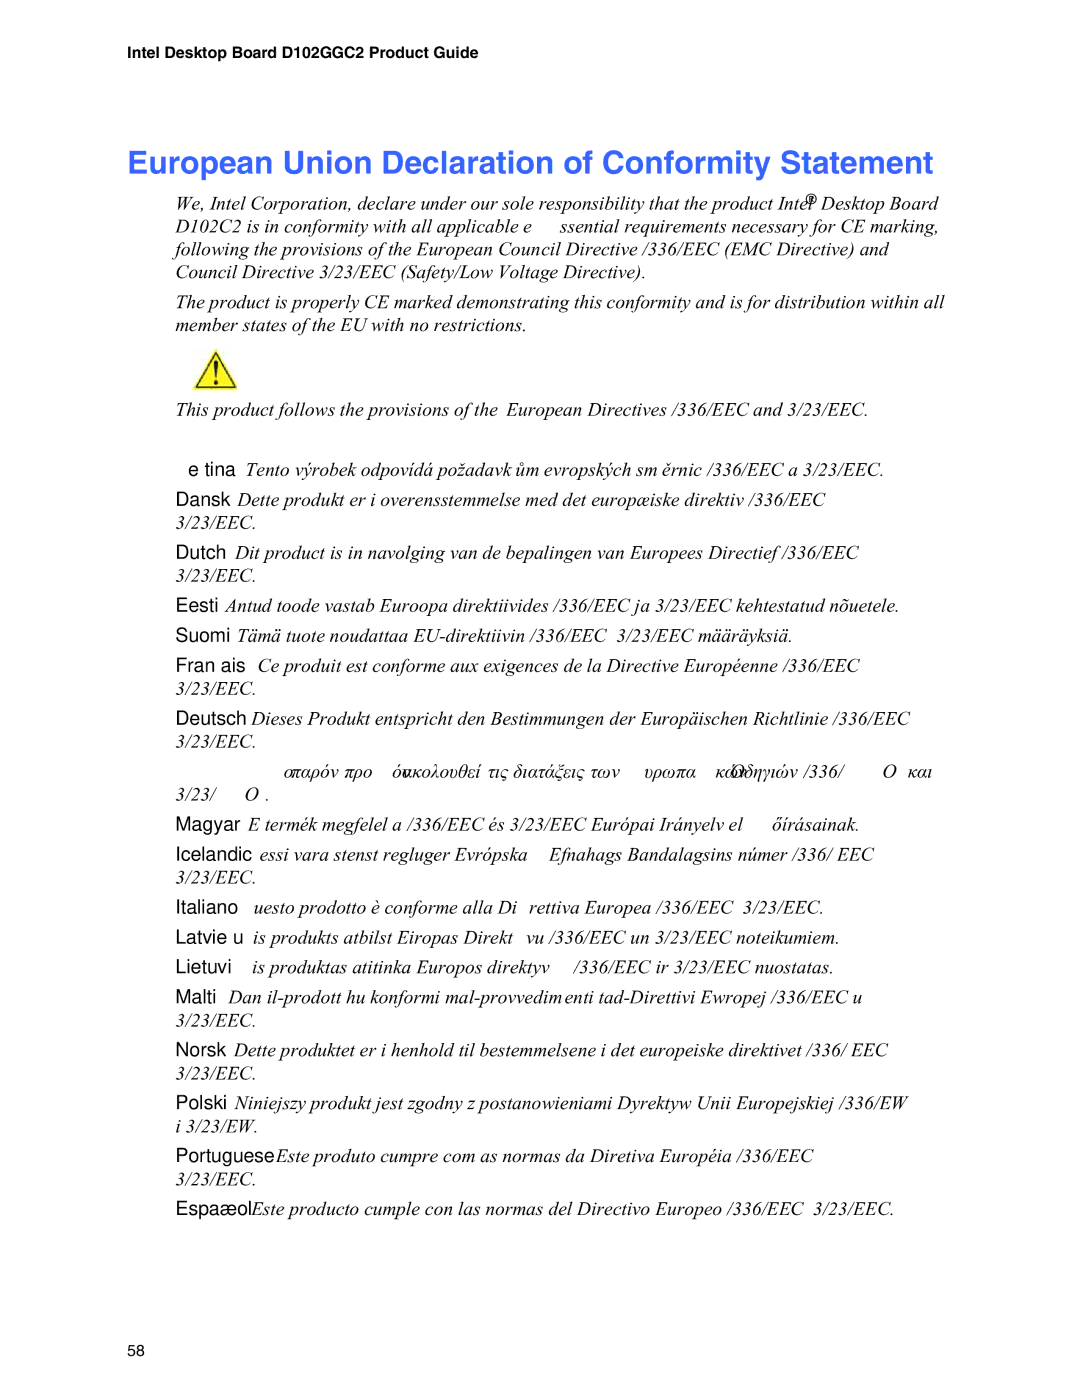 Intel D102GGC2 manual European Union Declaration of Conformity Statement 